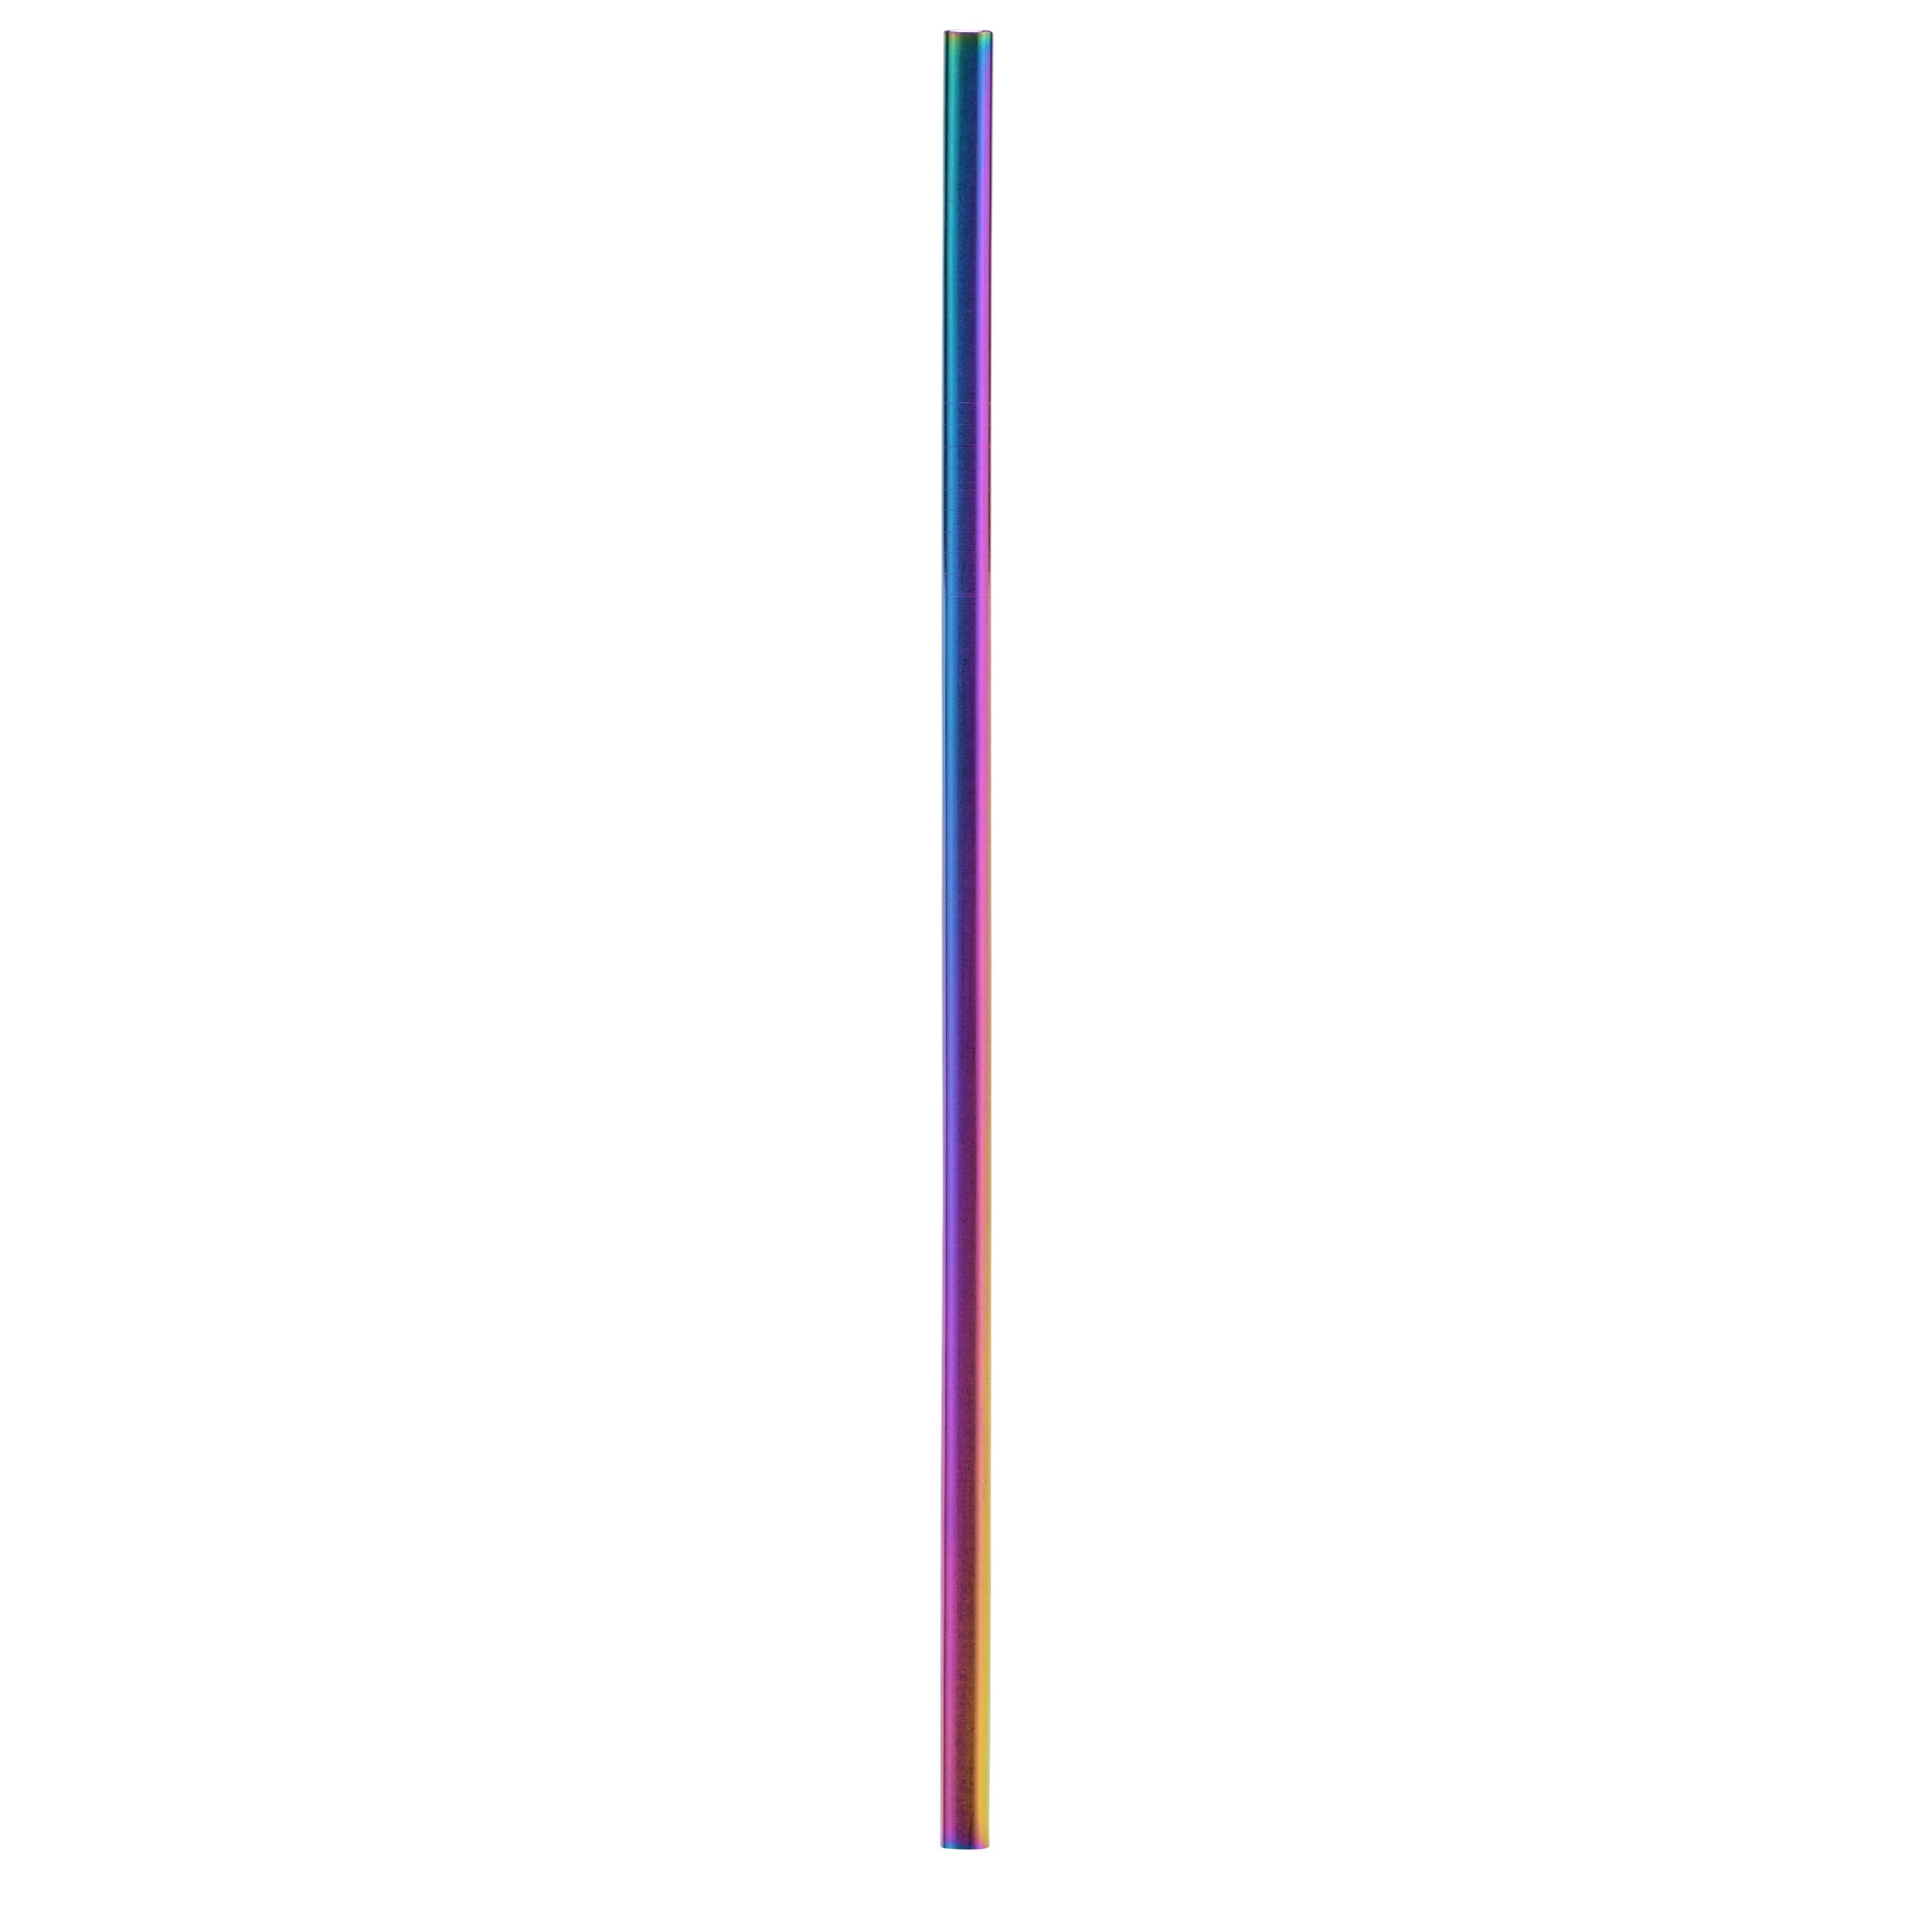 Straight Metallic Rainbow Stainless Steel Straws (40 pack)